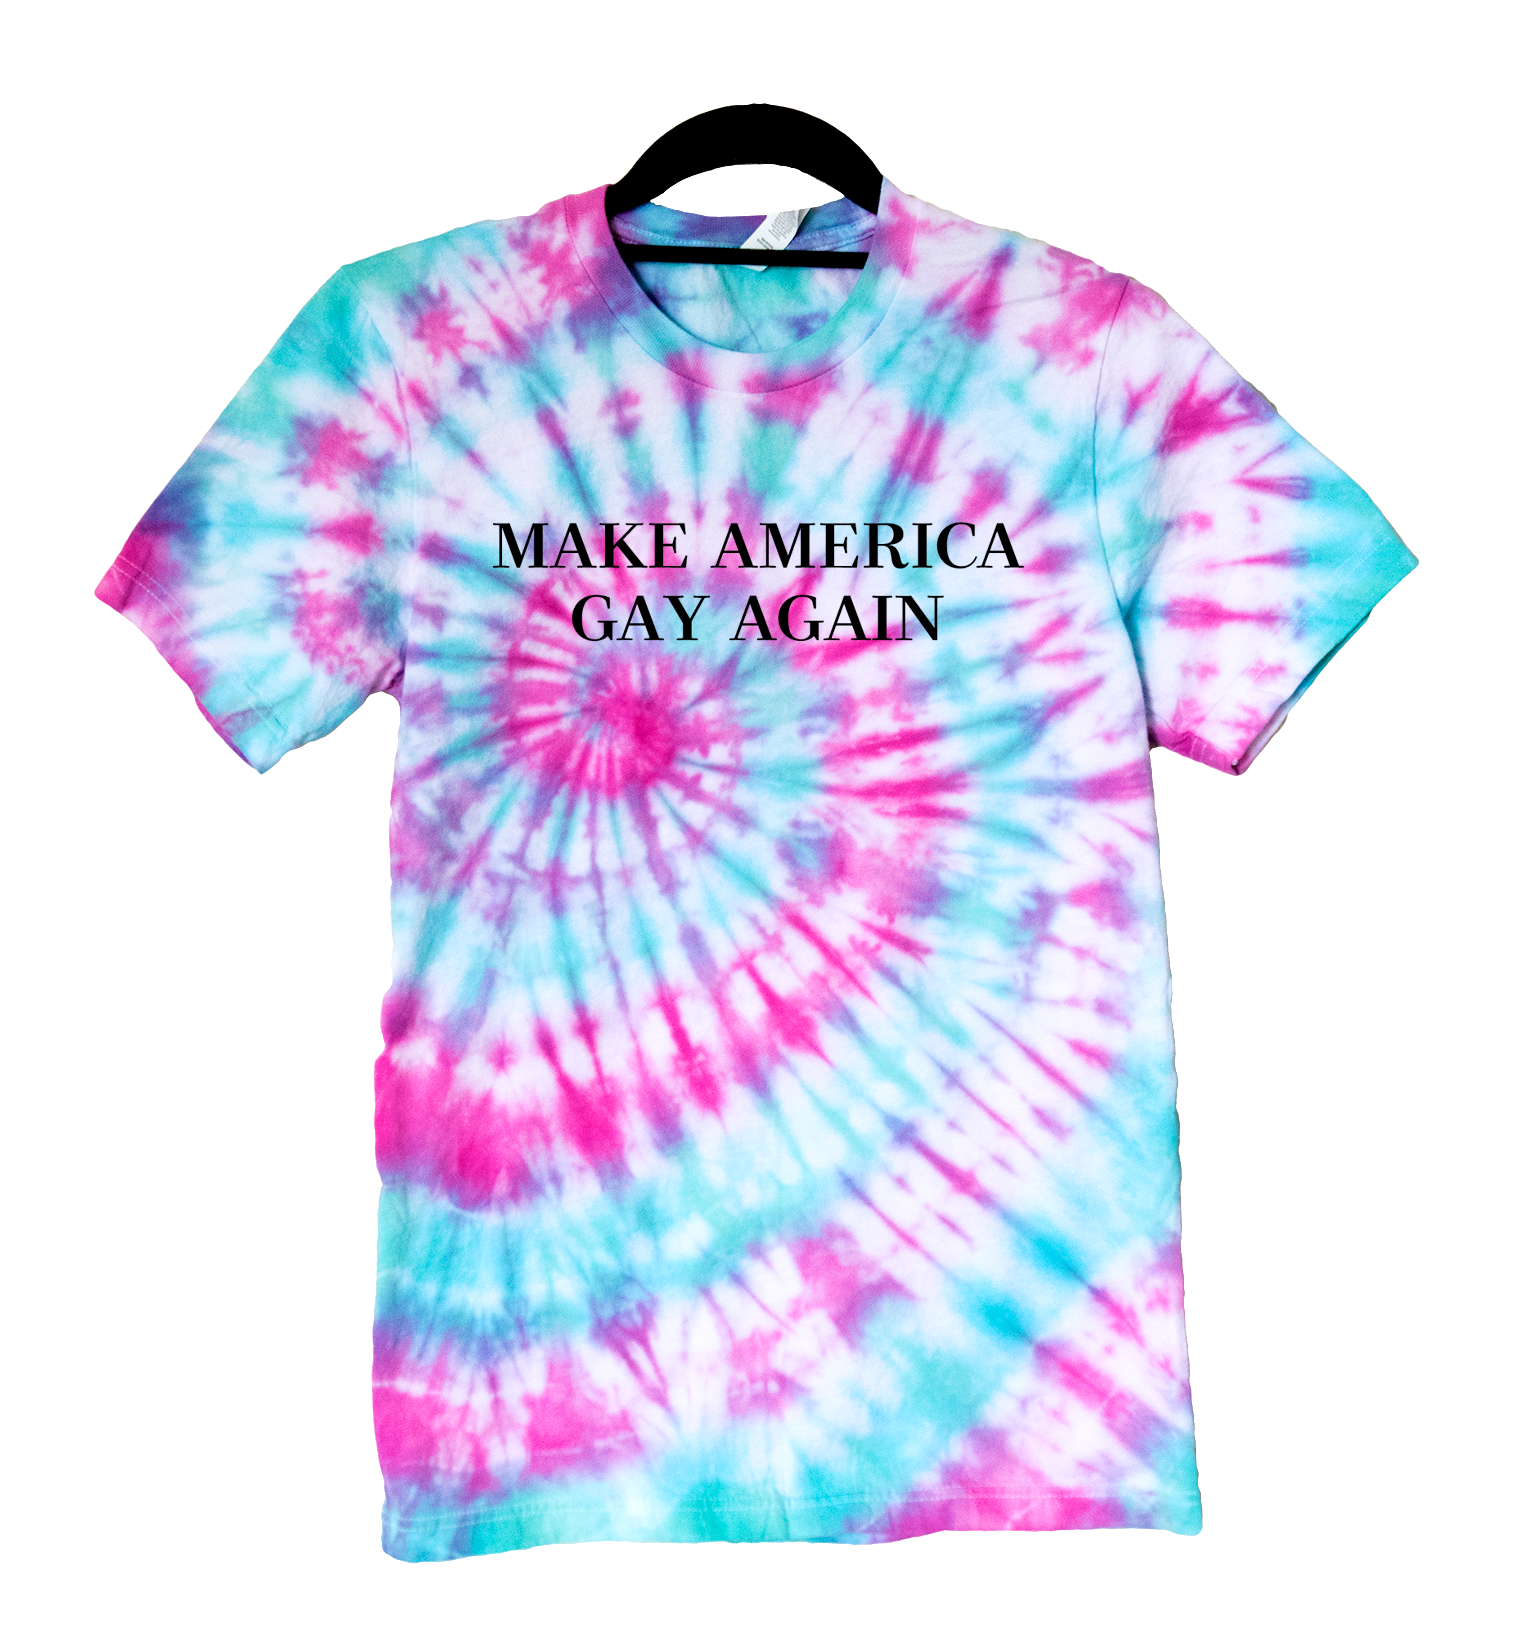 Make America Gay Again Shirt